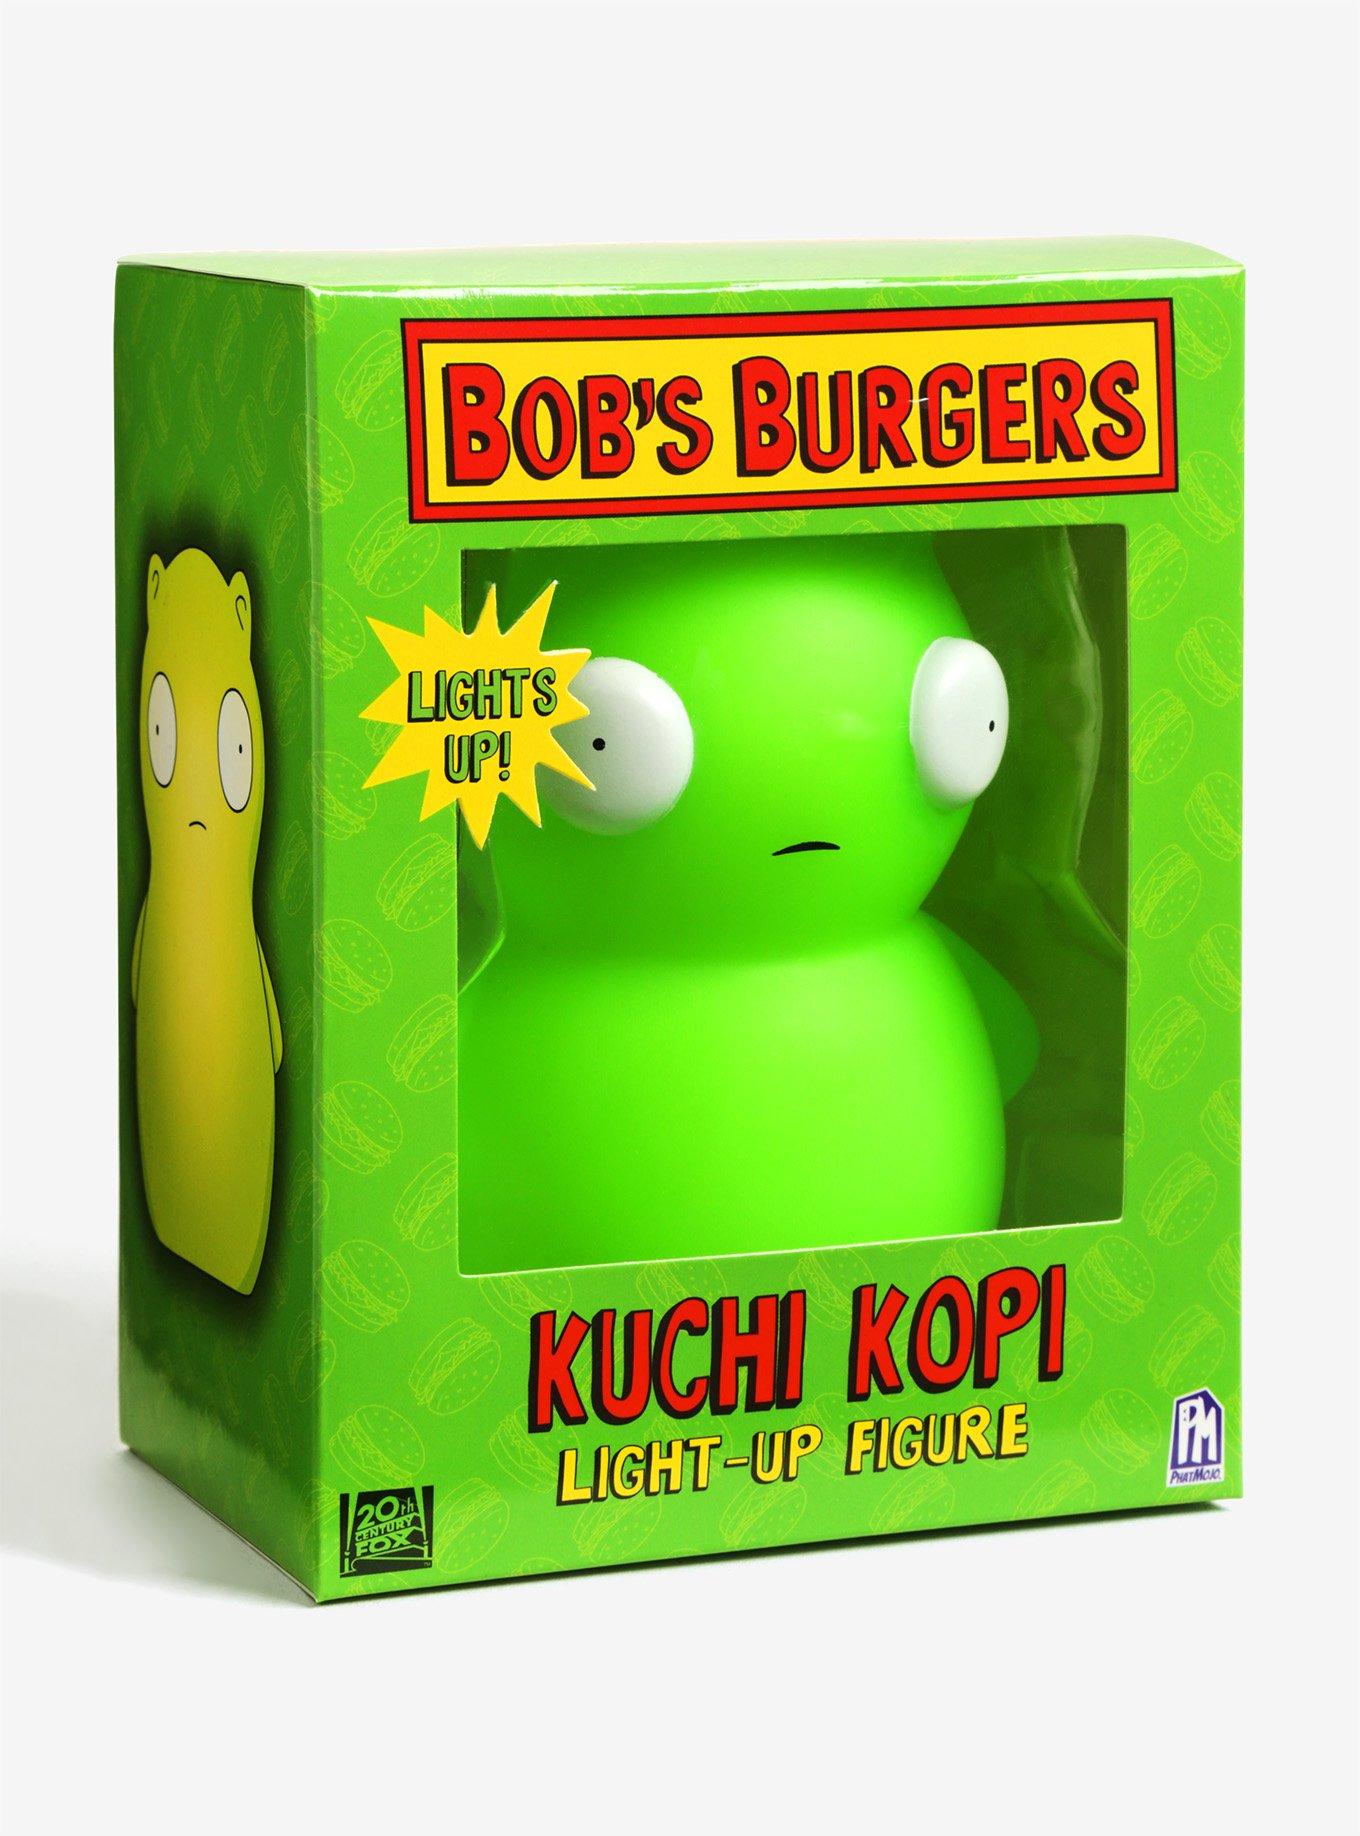 WIP] Kuchi Kopi from Bob's Burgers. I'm going to do Louise